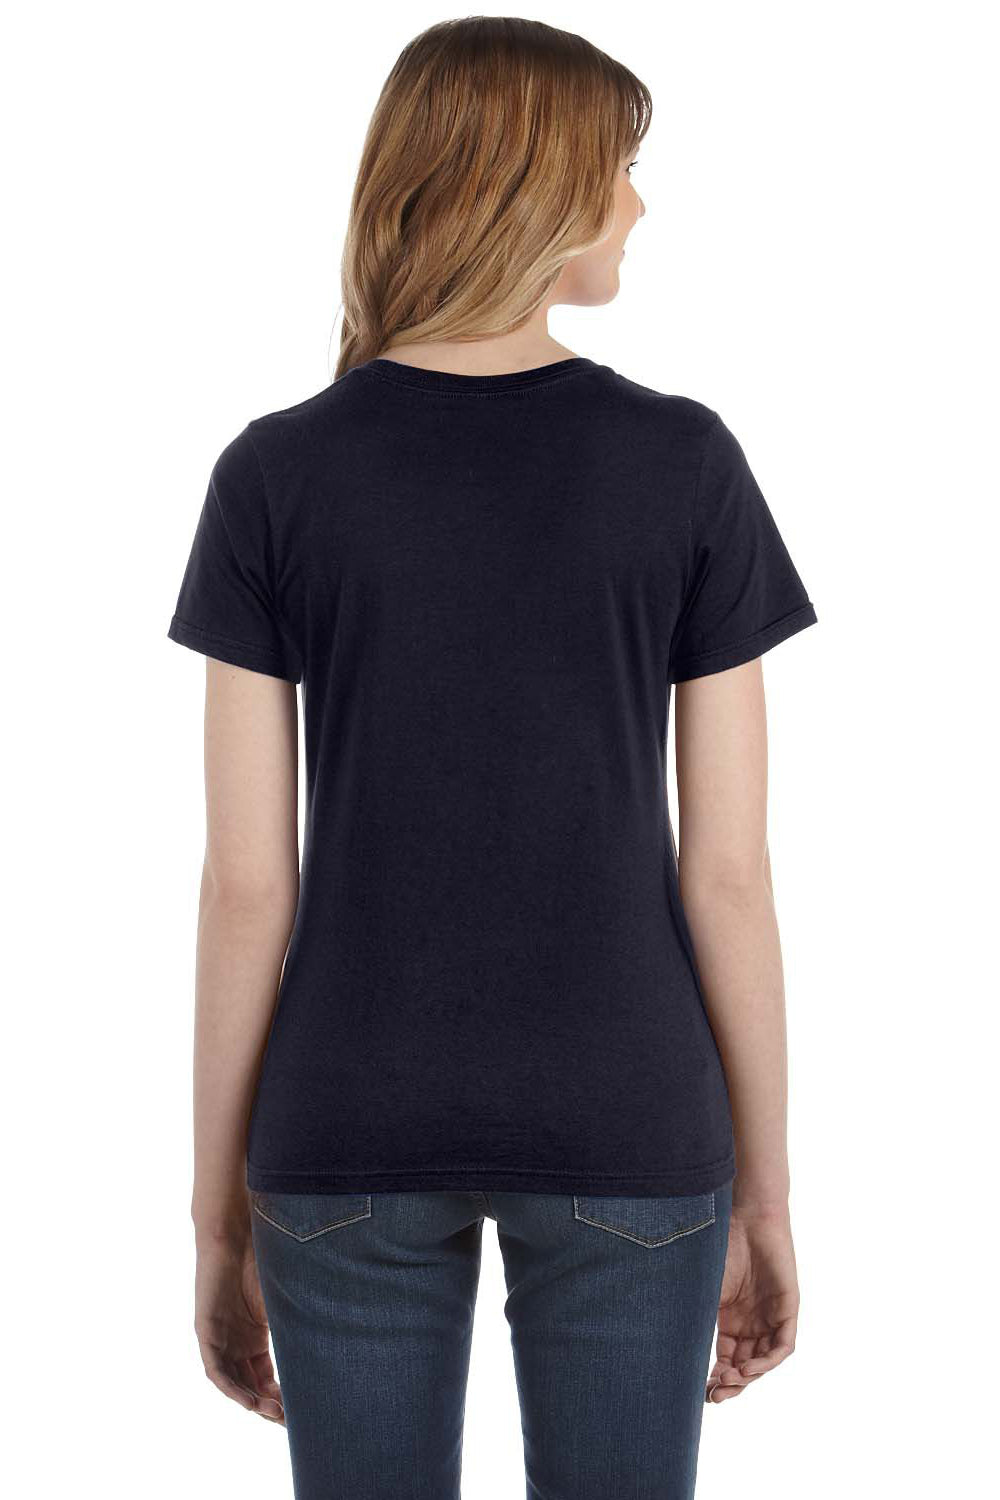 Anvil 880 Womens Short Sleeve Crewneck T-Shirt Navy Blue Back